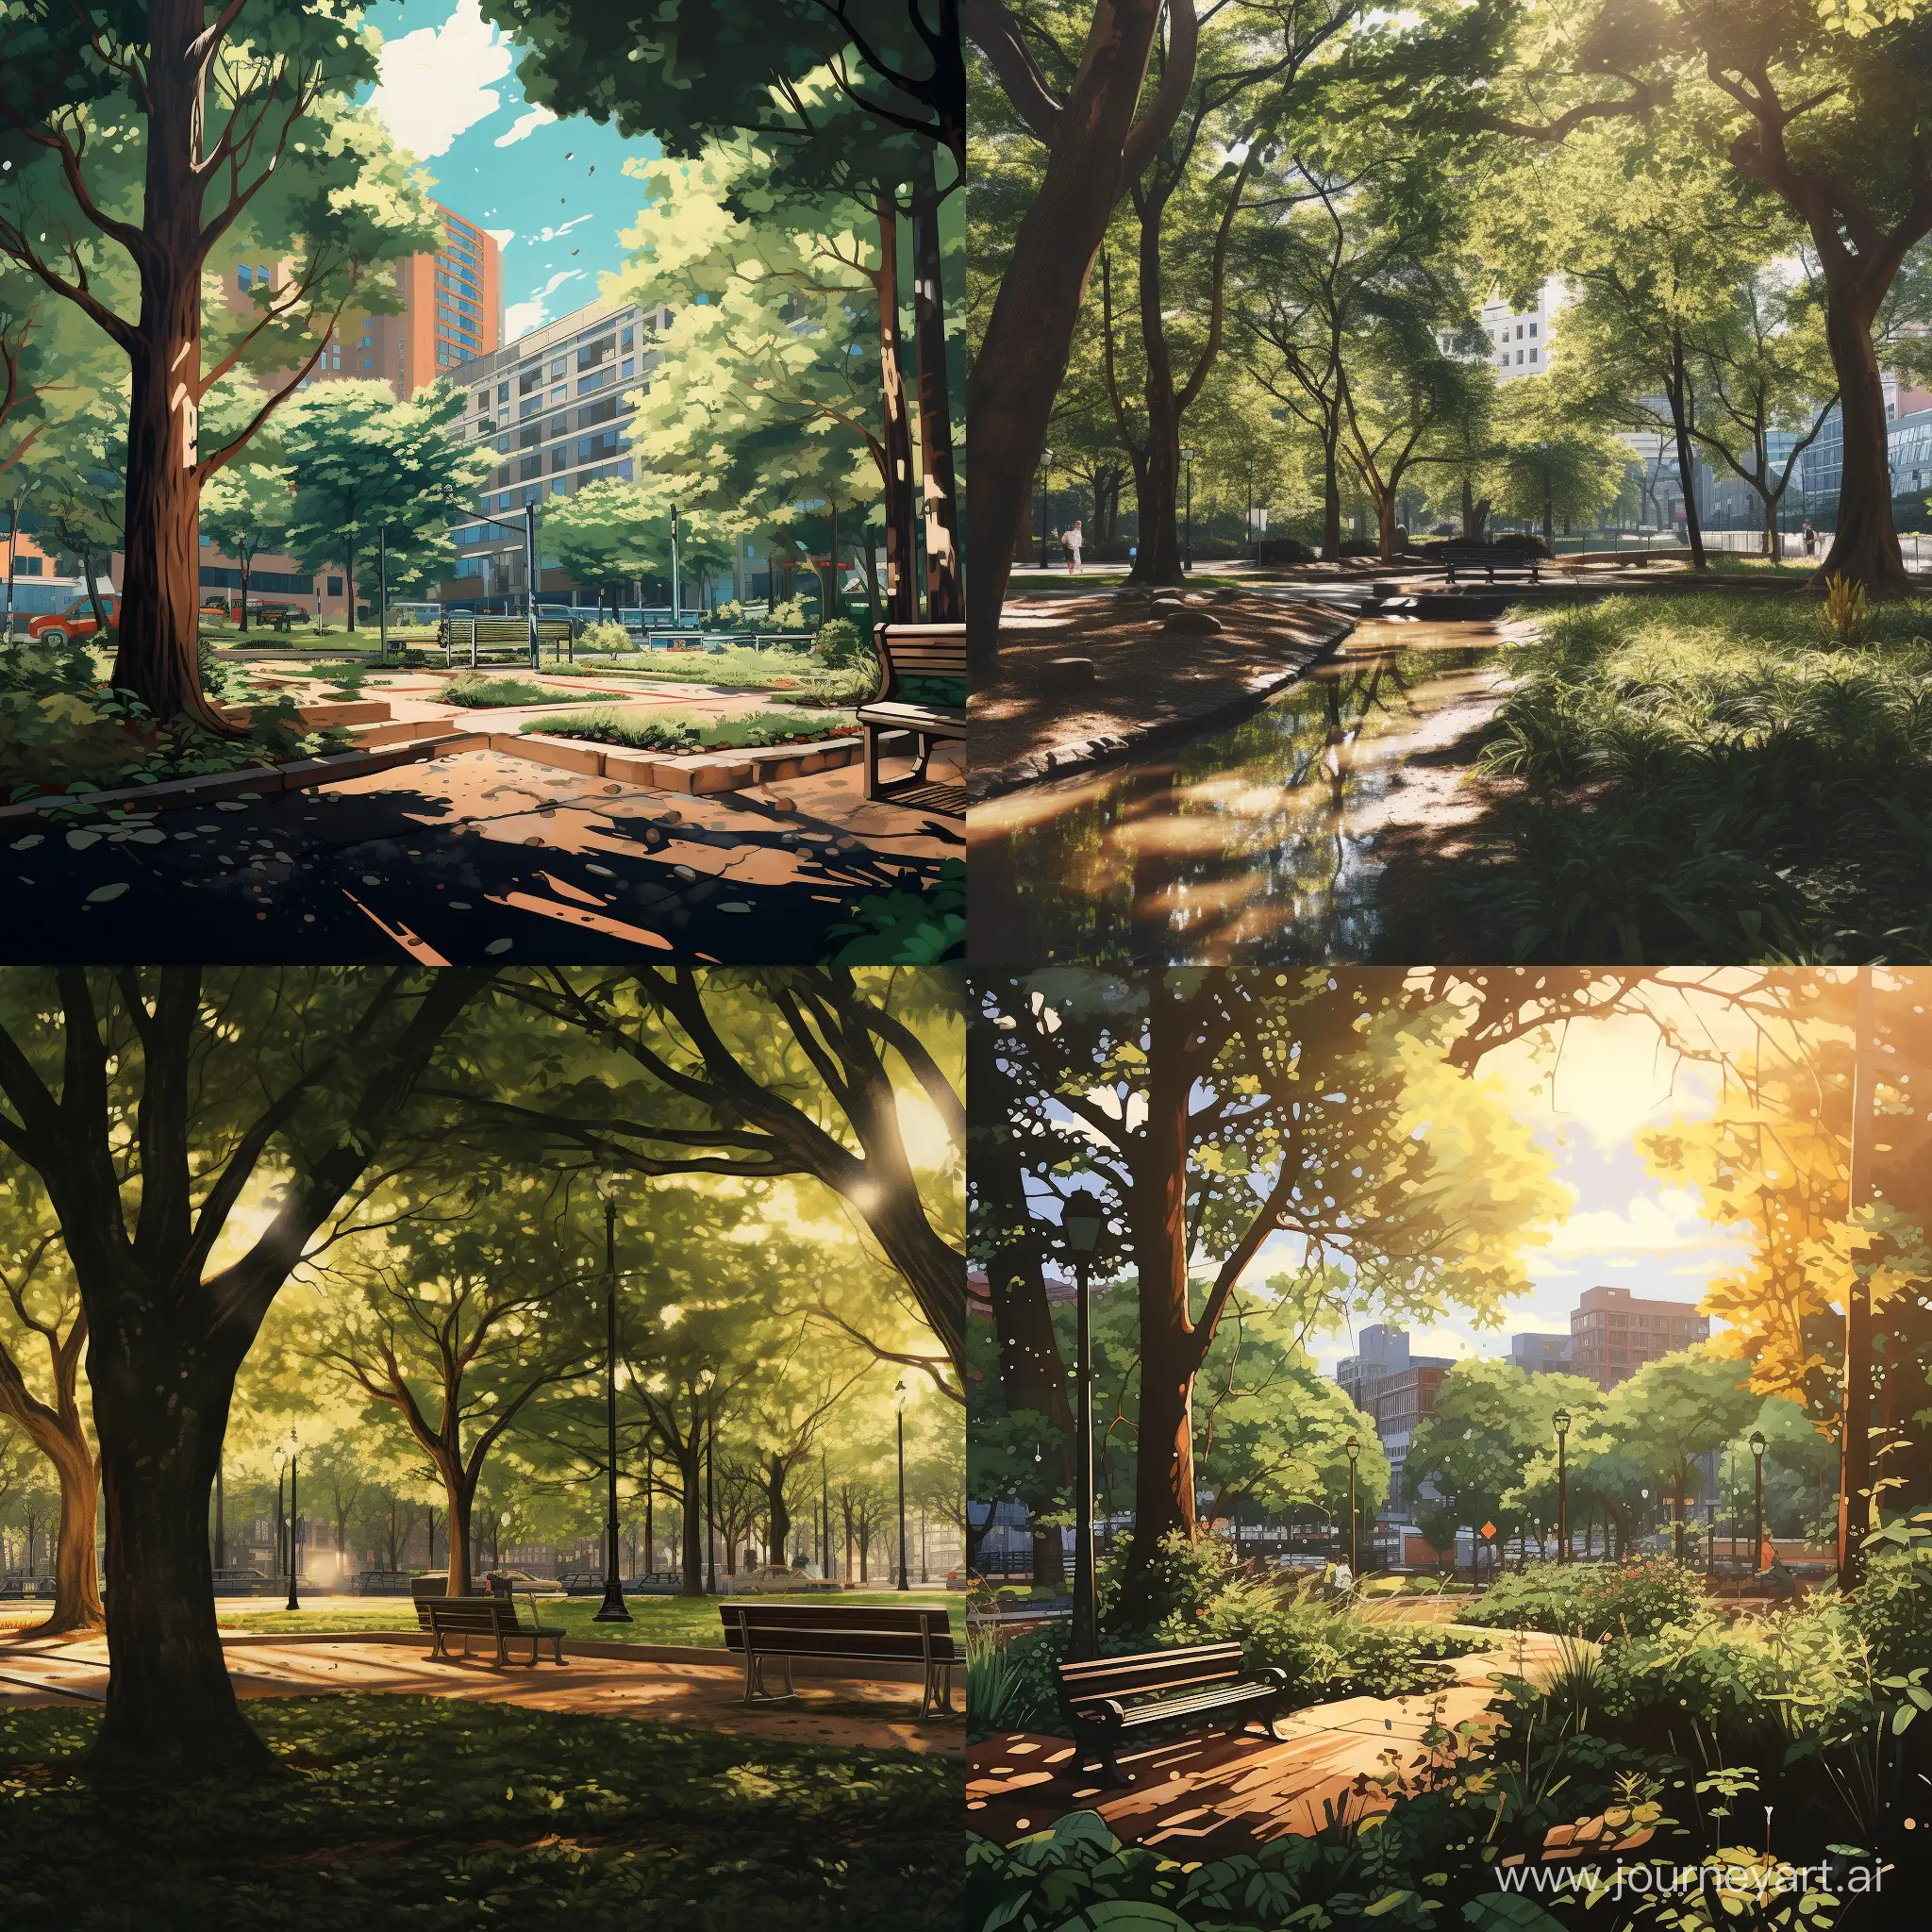 Nostalgic-80s-Urban-Park-Scene-with-Sunlight-Filtering-Through-Tree-Leaves